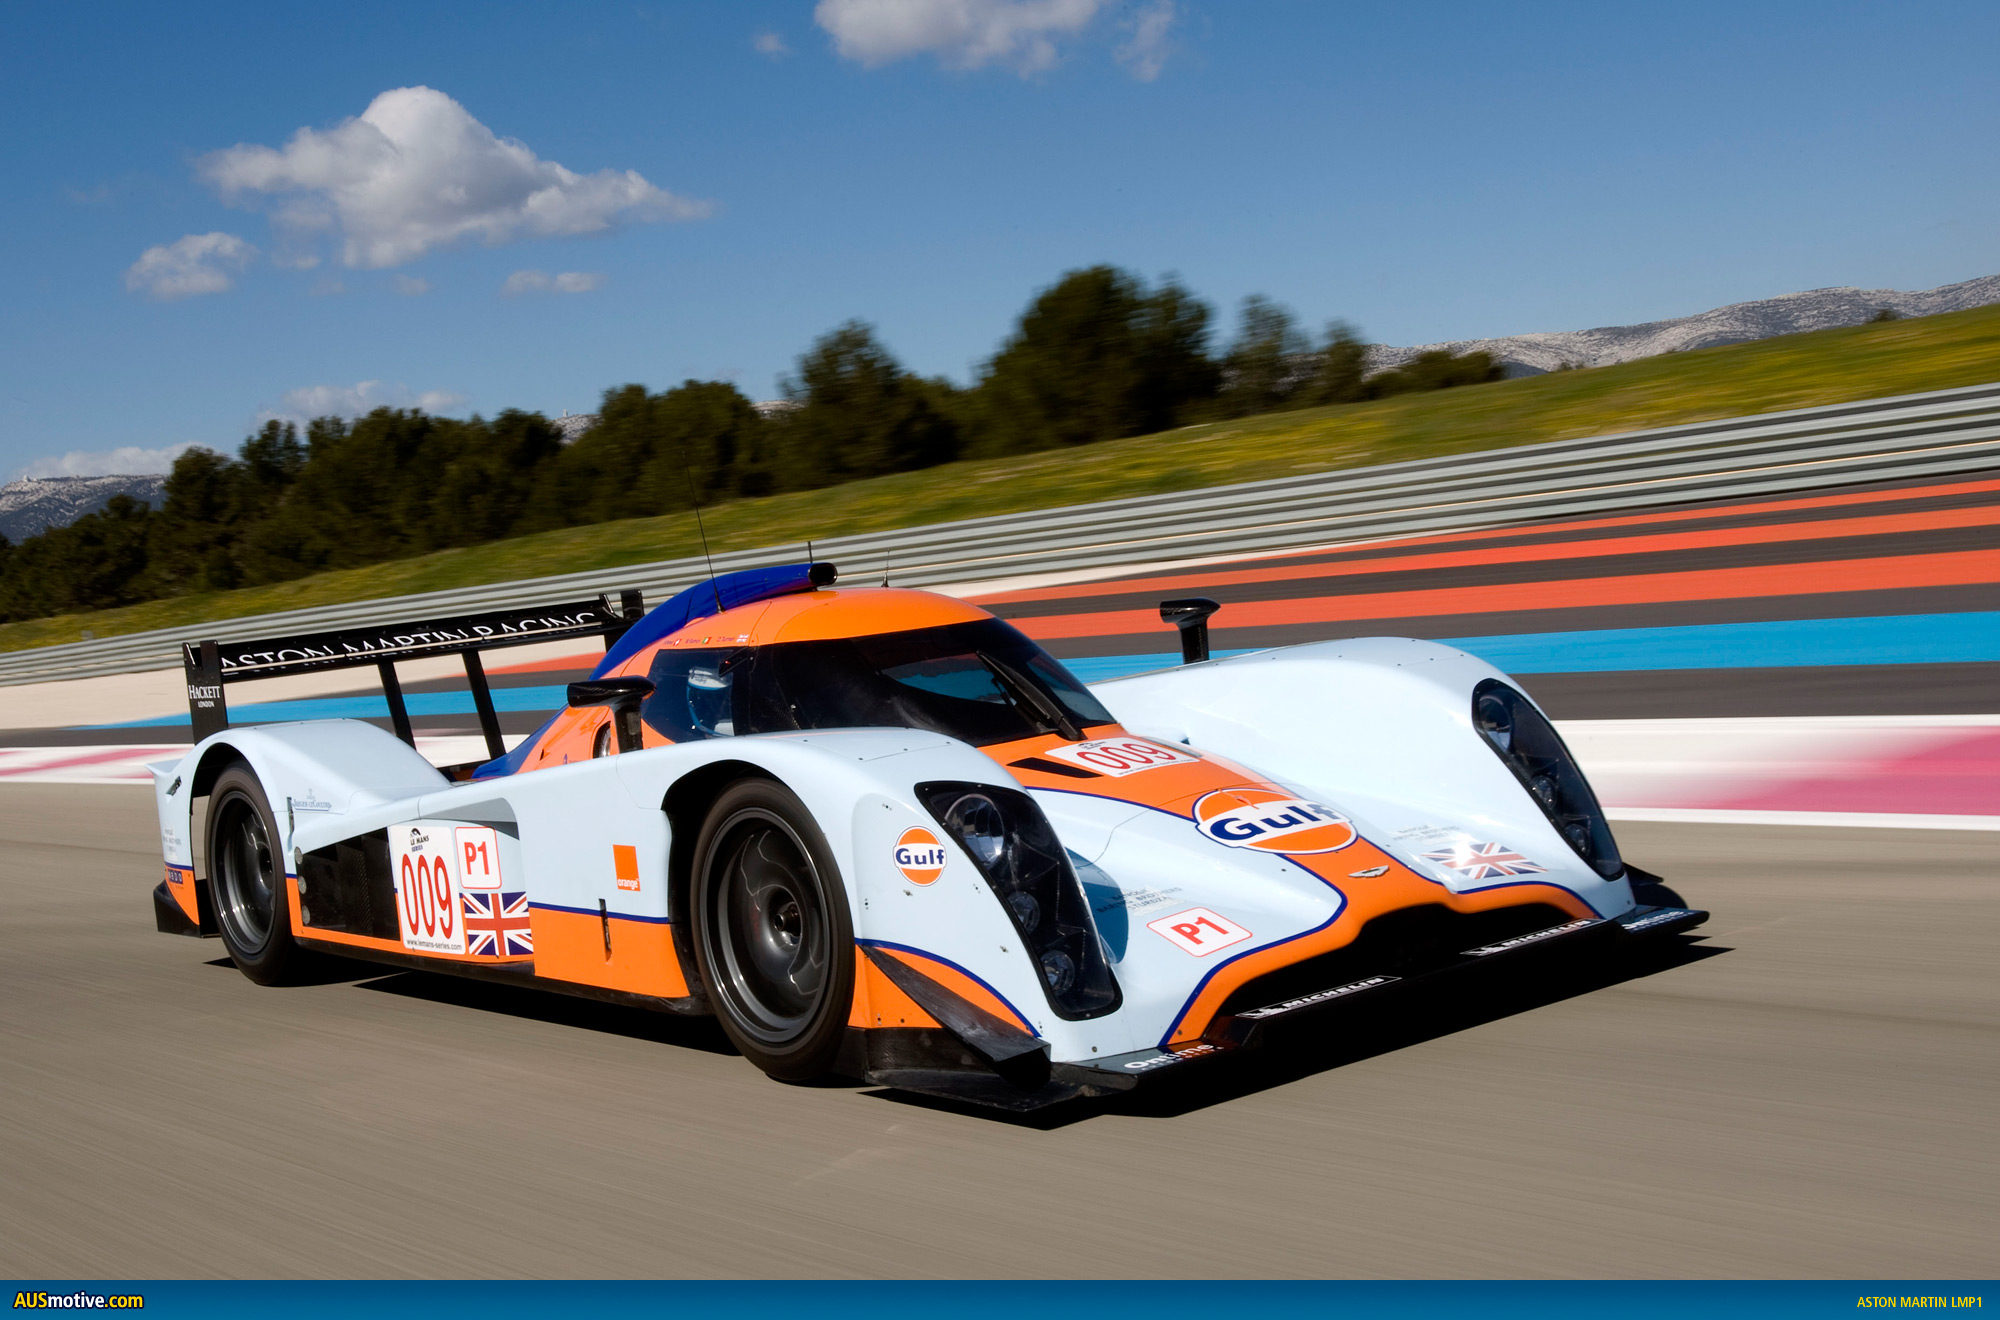 AUSmotive.com » Aston Martin Racing chase history at Le Mans